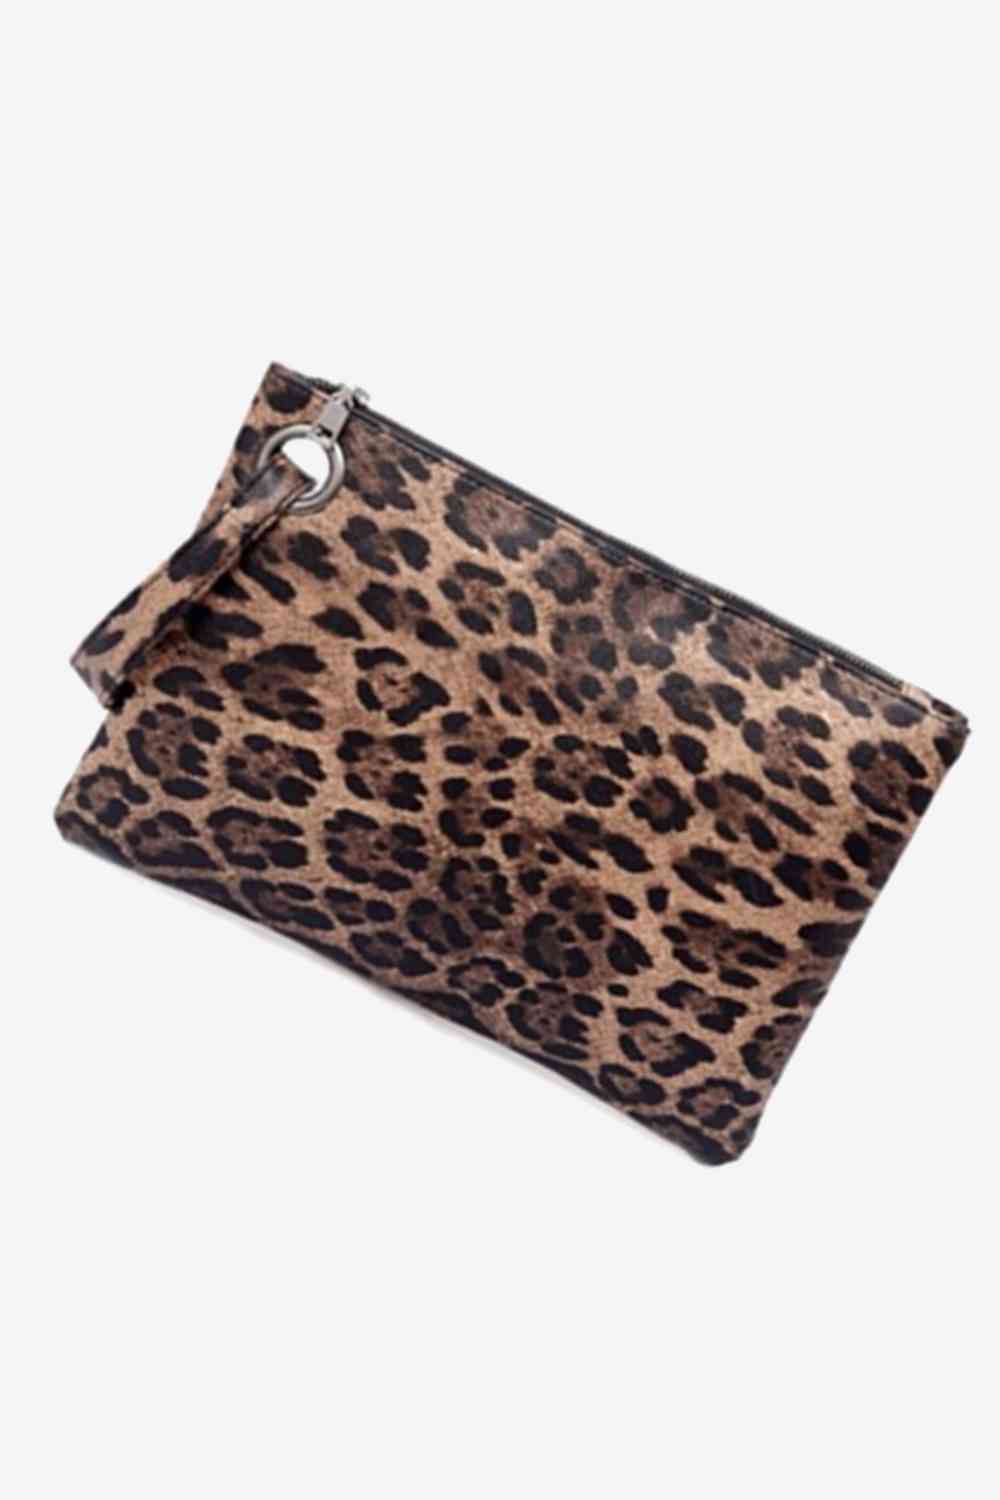 Leopard PU Leather Clutch - SELFTRITSS